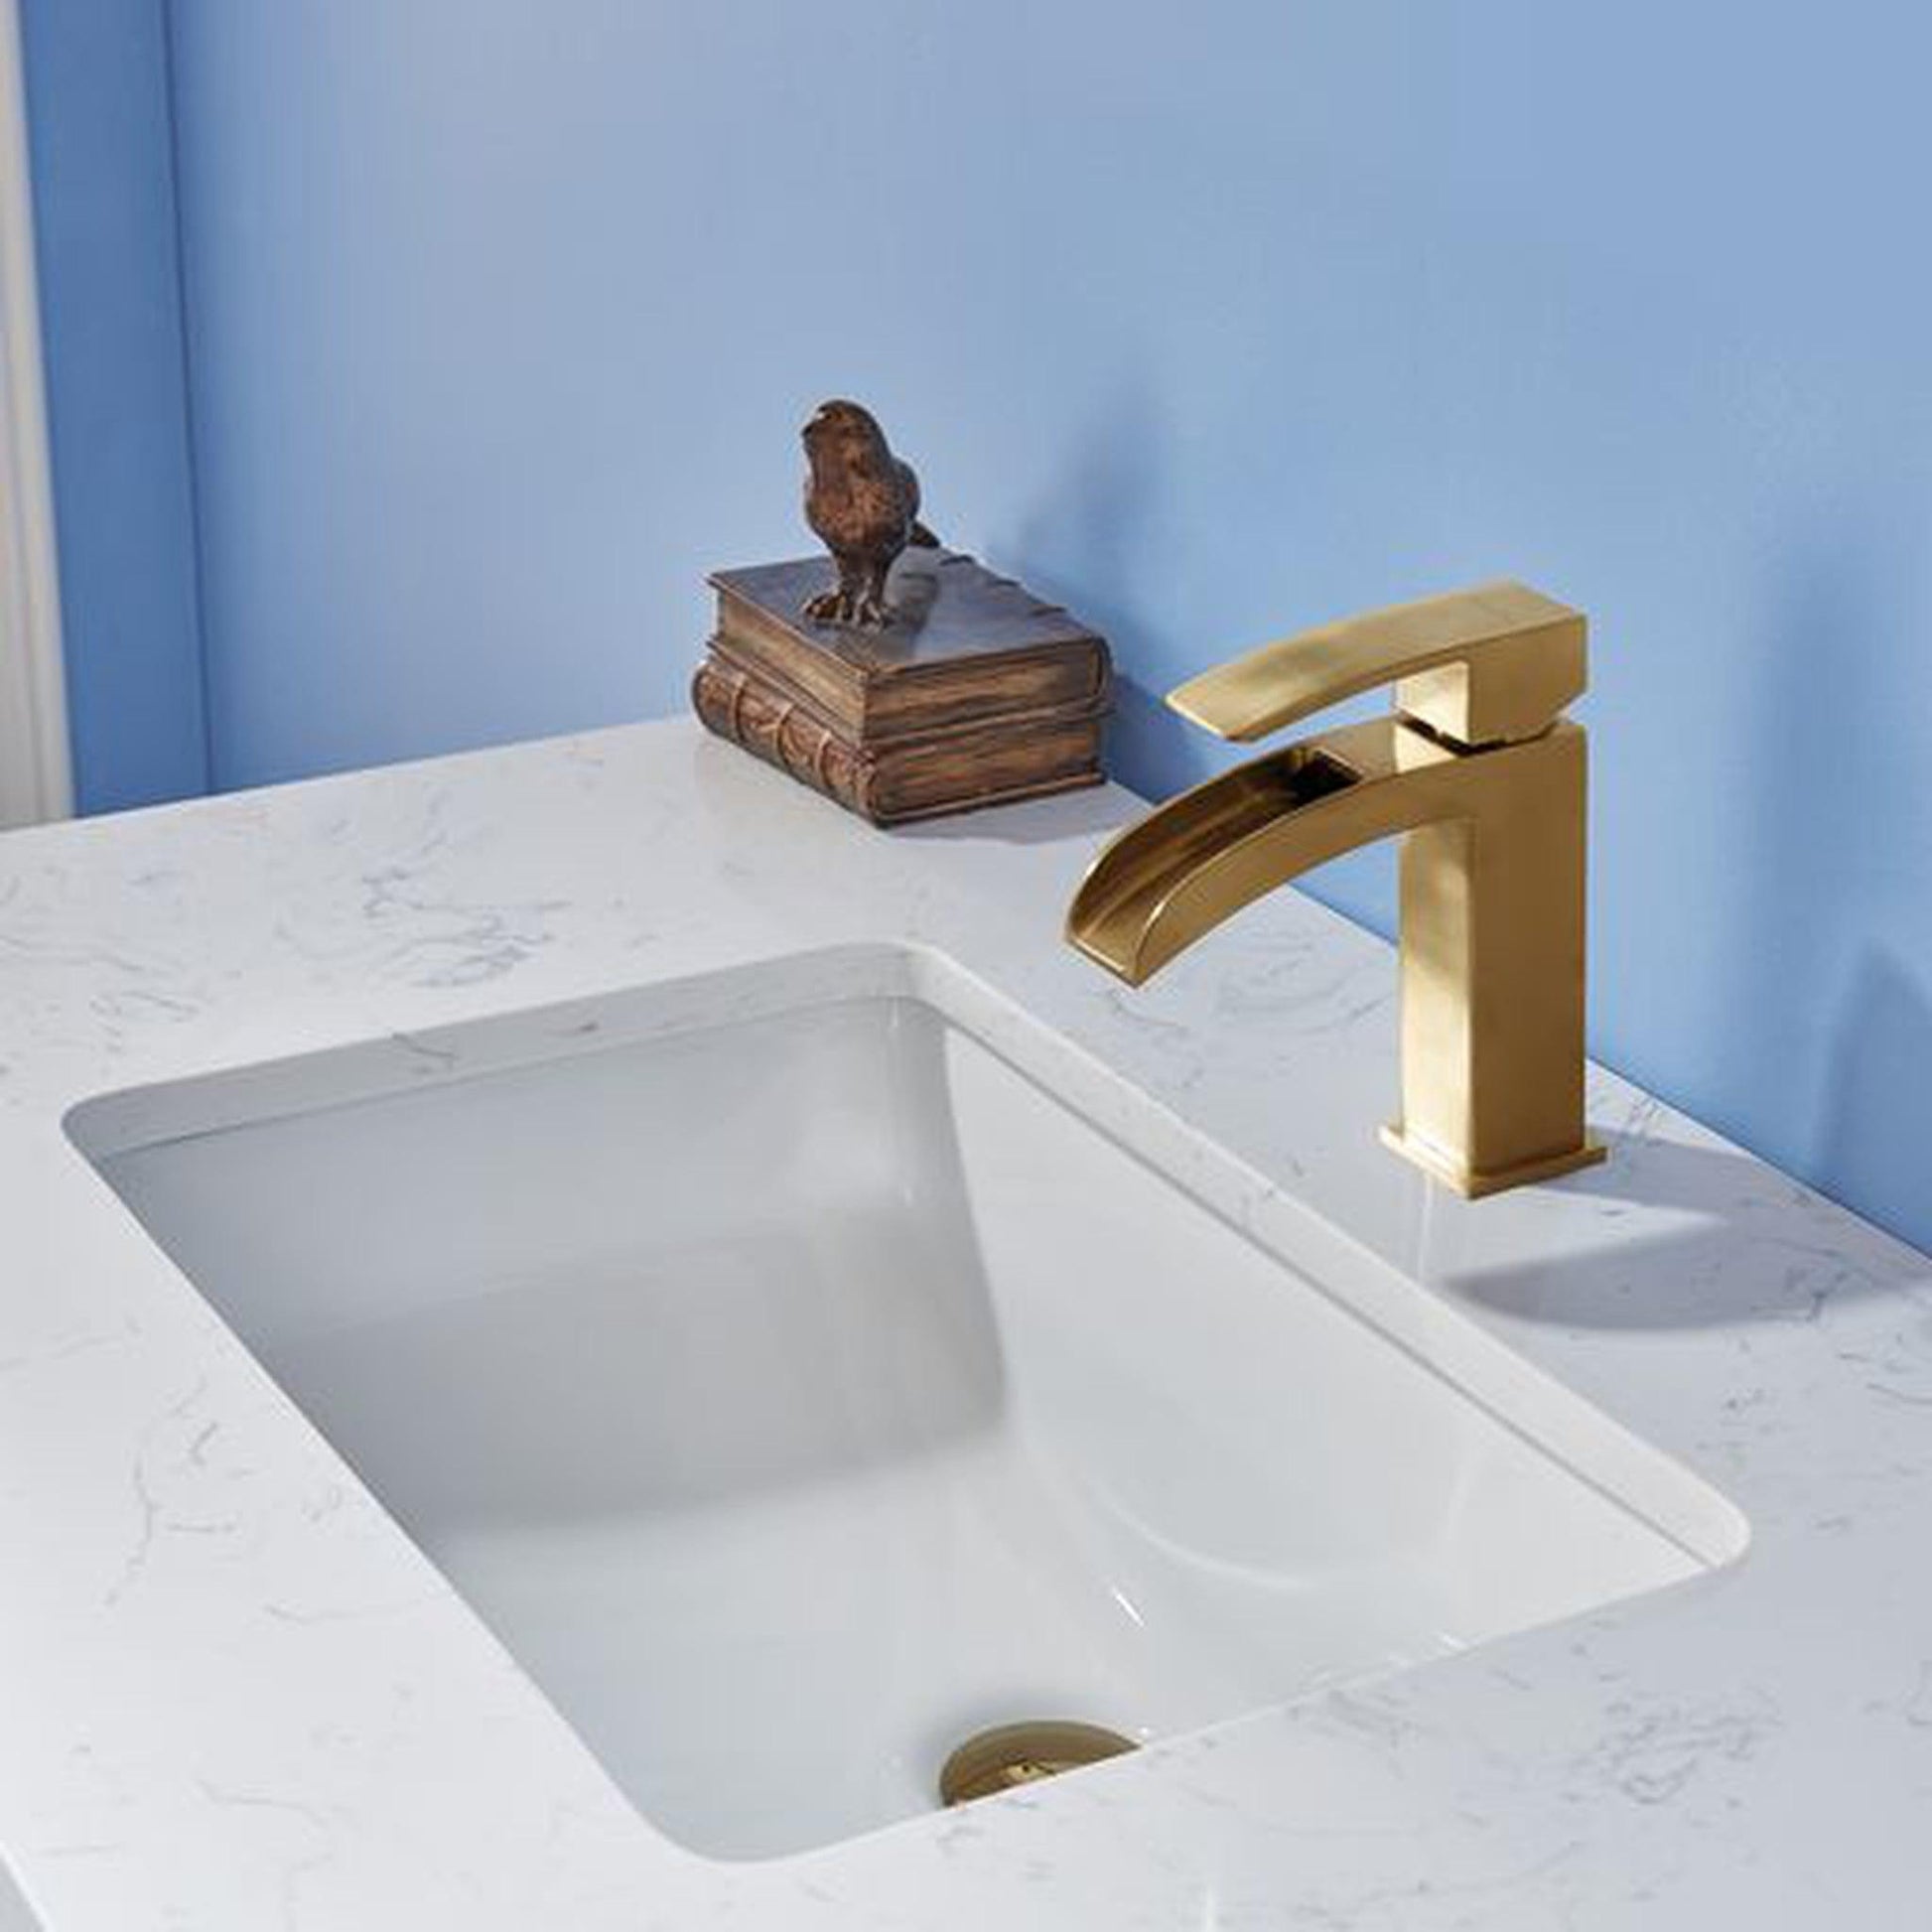 Altair Jackson 36" Single White Freestanding Bathroom Vanity Set With Aosta White Composite Stone Top, Rectangular Undermount Ceramic Sink, and Overflow